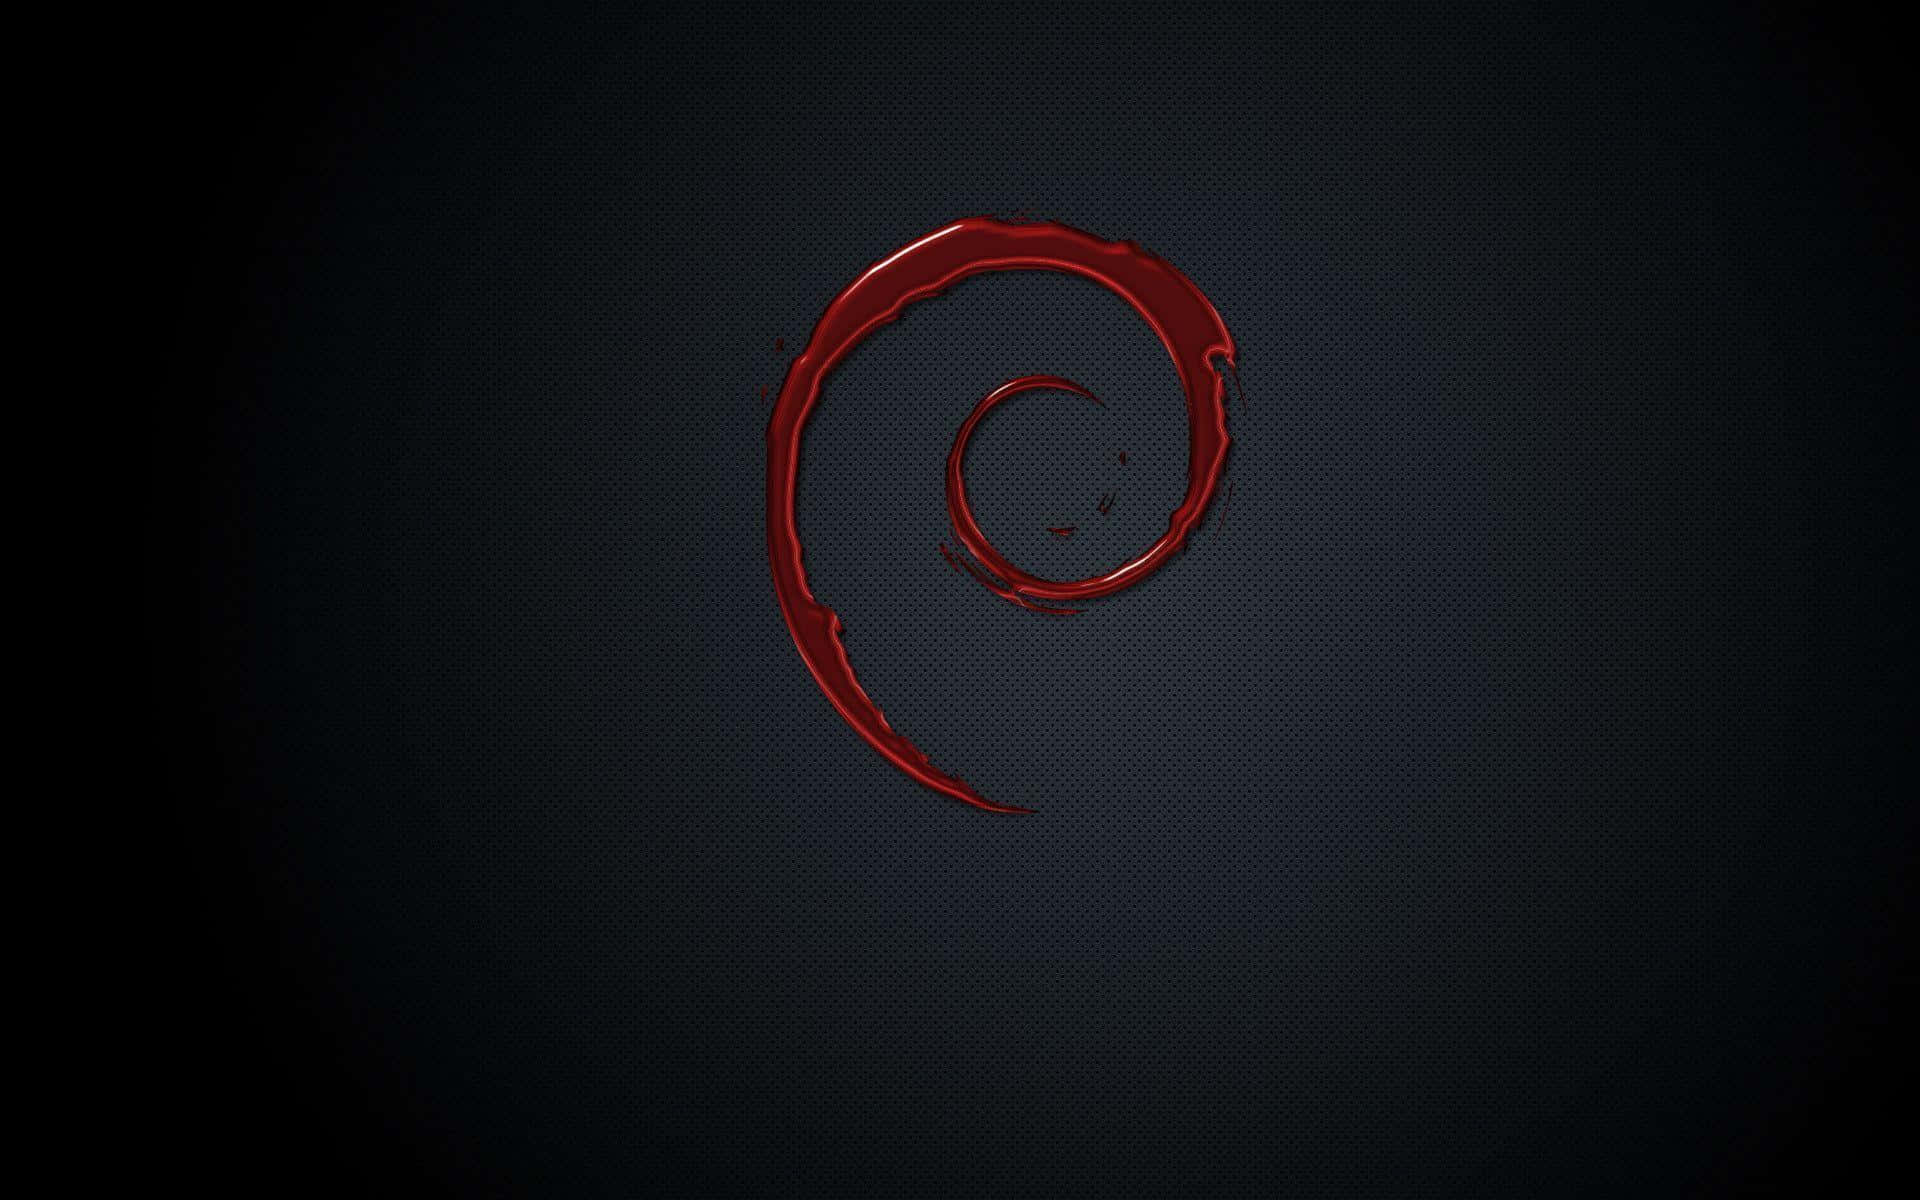 Debian Red Swirl Logo Dark Background Wallpaper